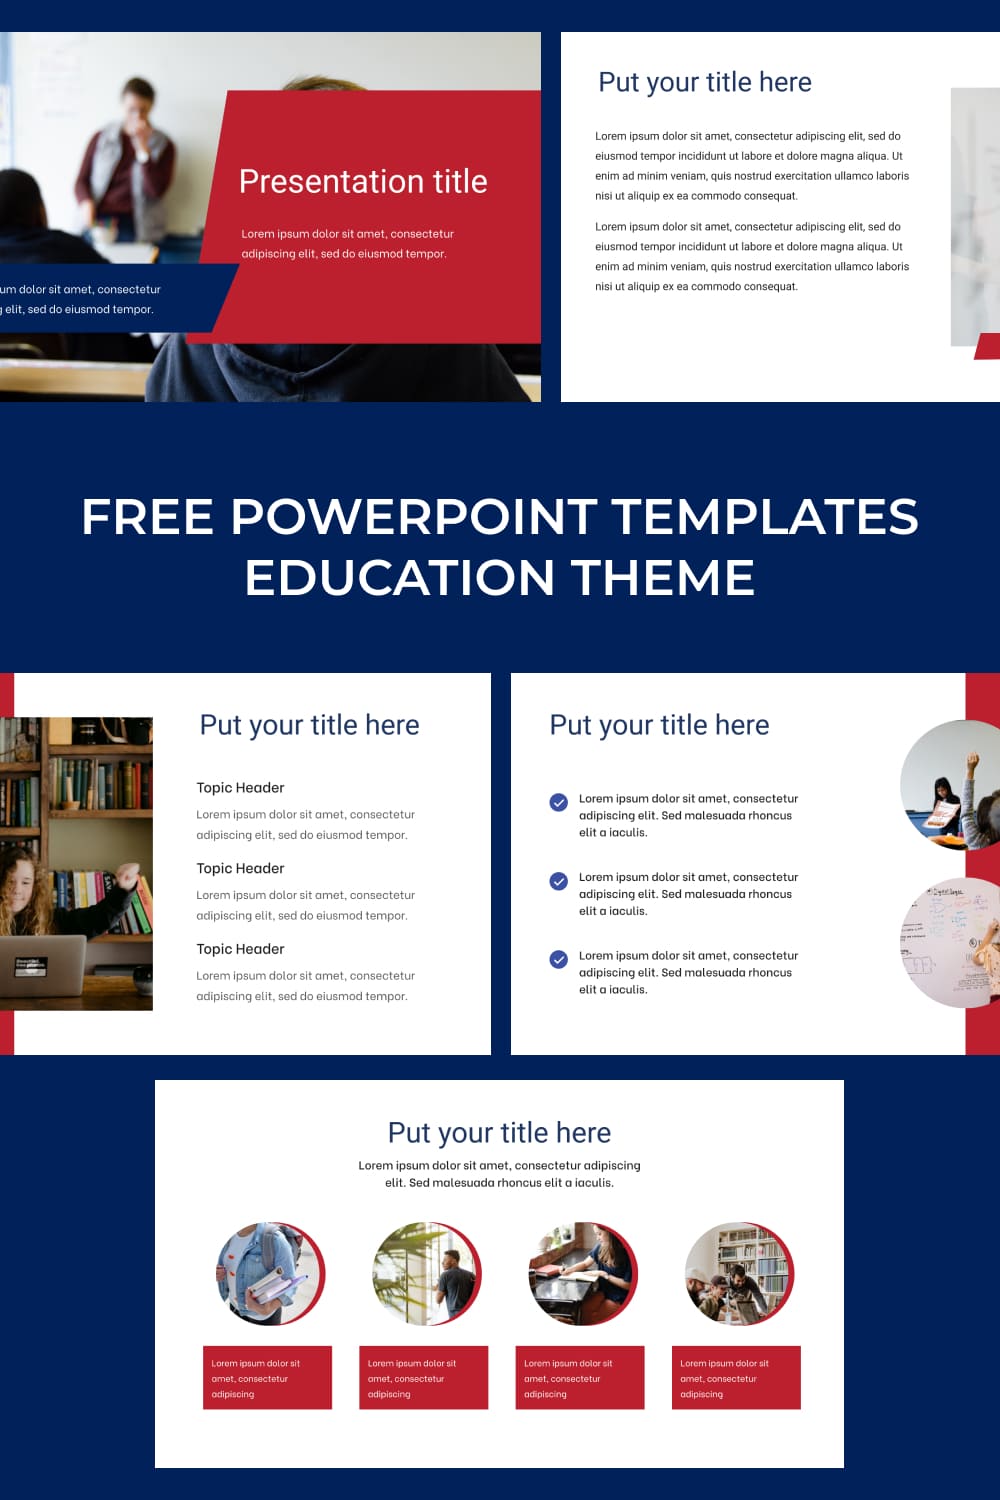 Pinterest Free Powerpoint Templates Education Theme.